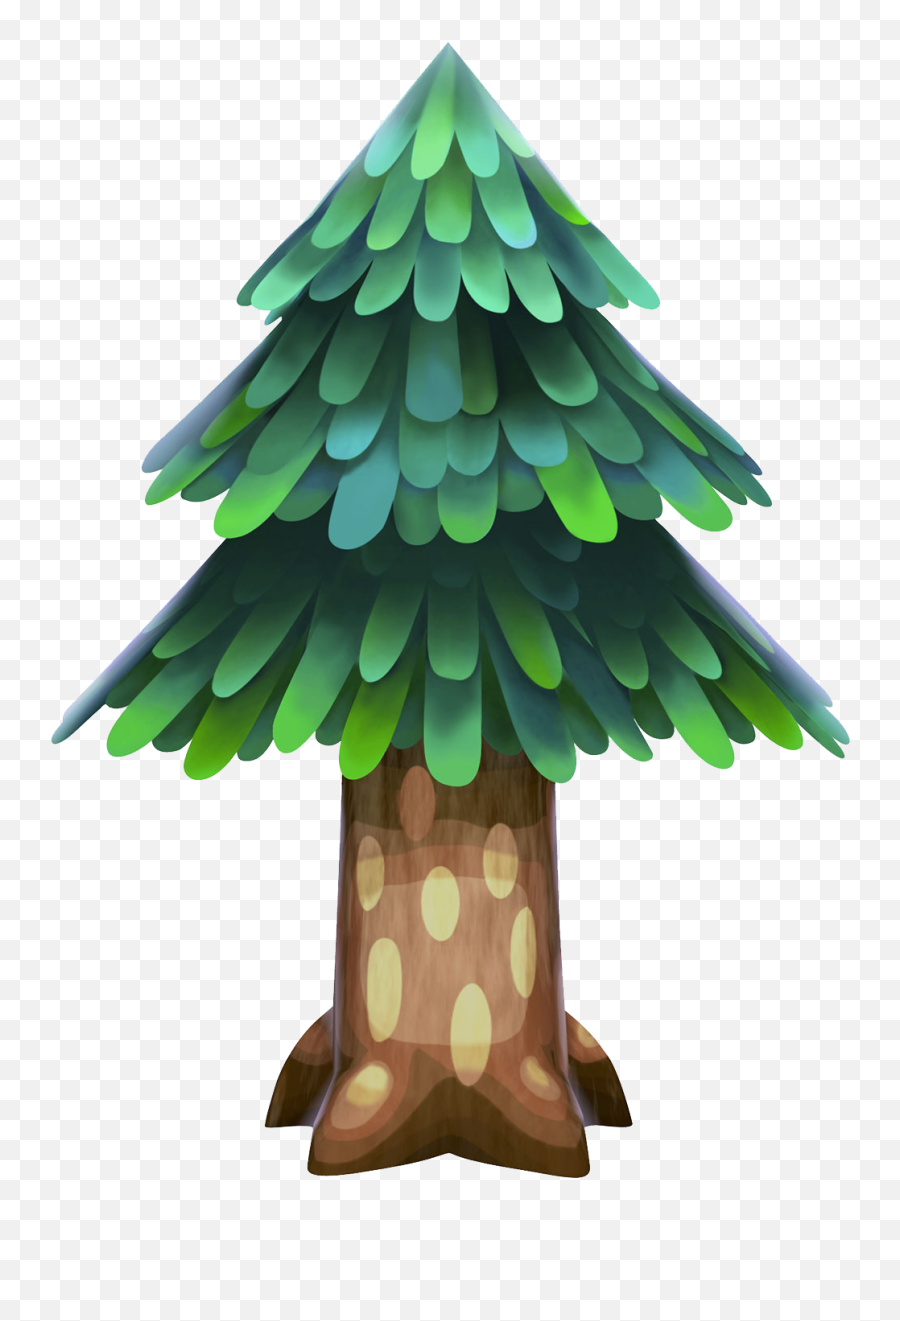 Cedar Tree Png Picture - Cedar Tree Animal Crossing,Cedar Tree Png